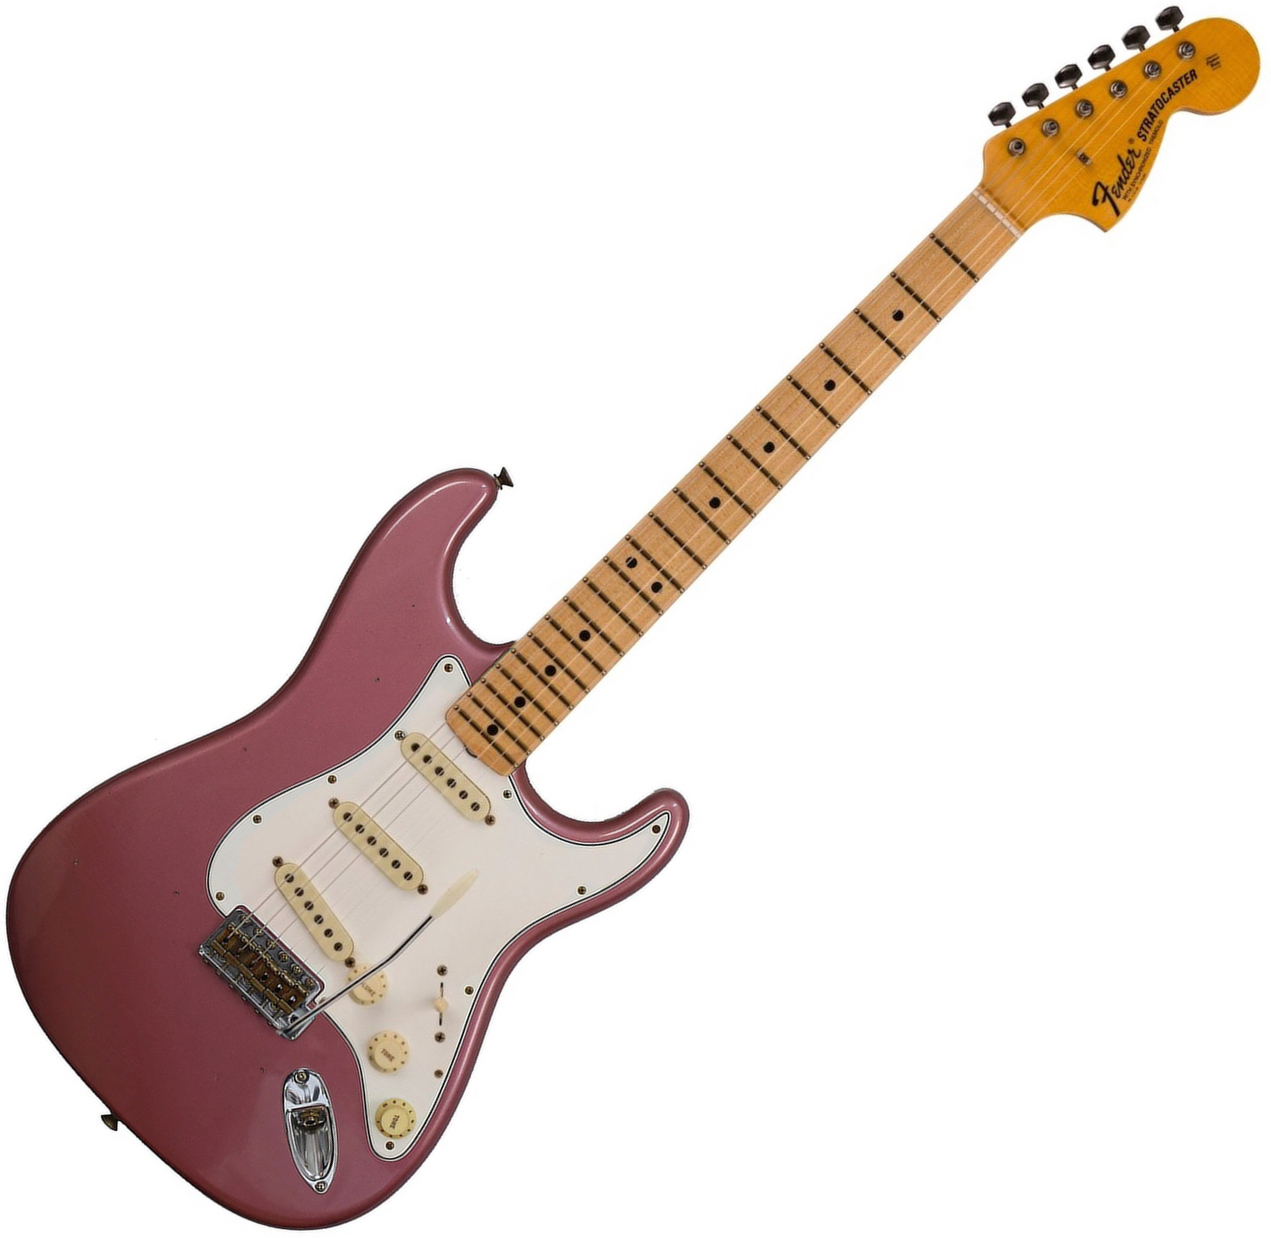 2023 Fall-22 LTD Fender Stratocaster 69 JRN Aged Champagne Met